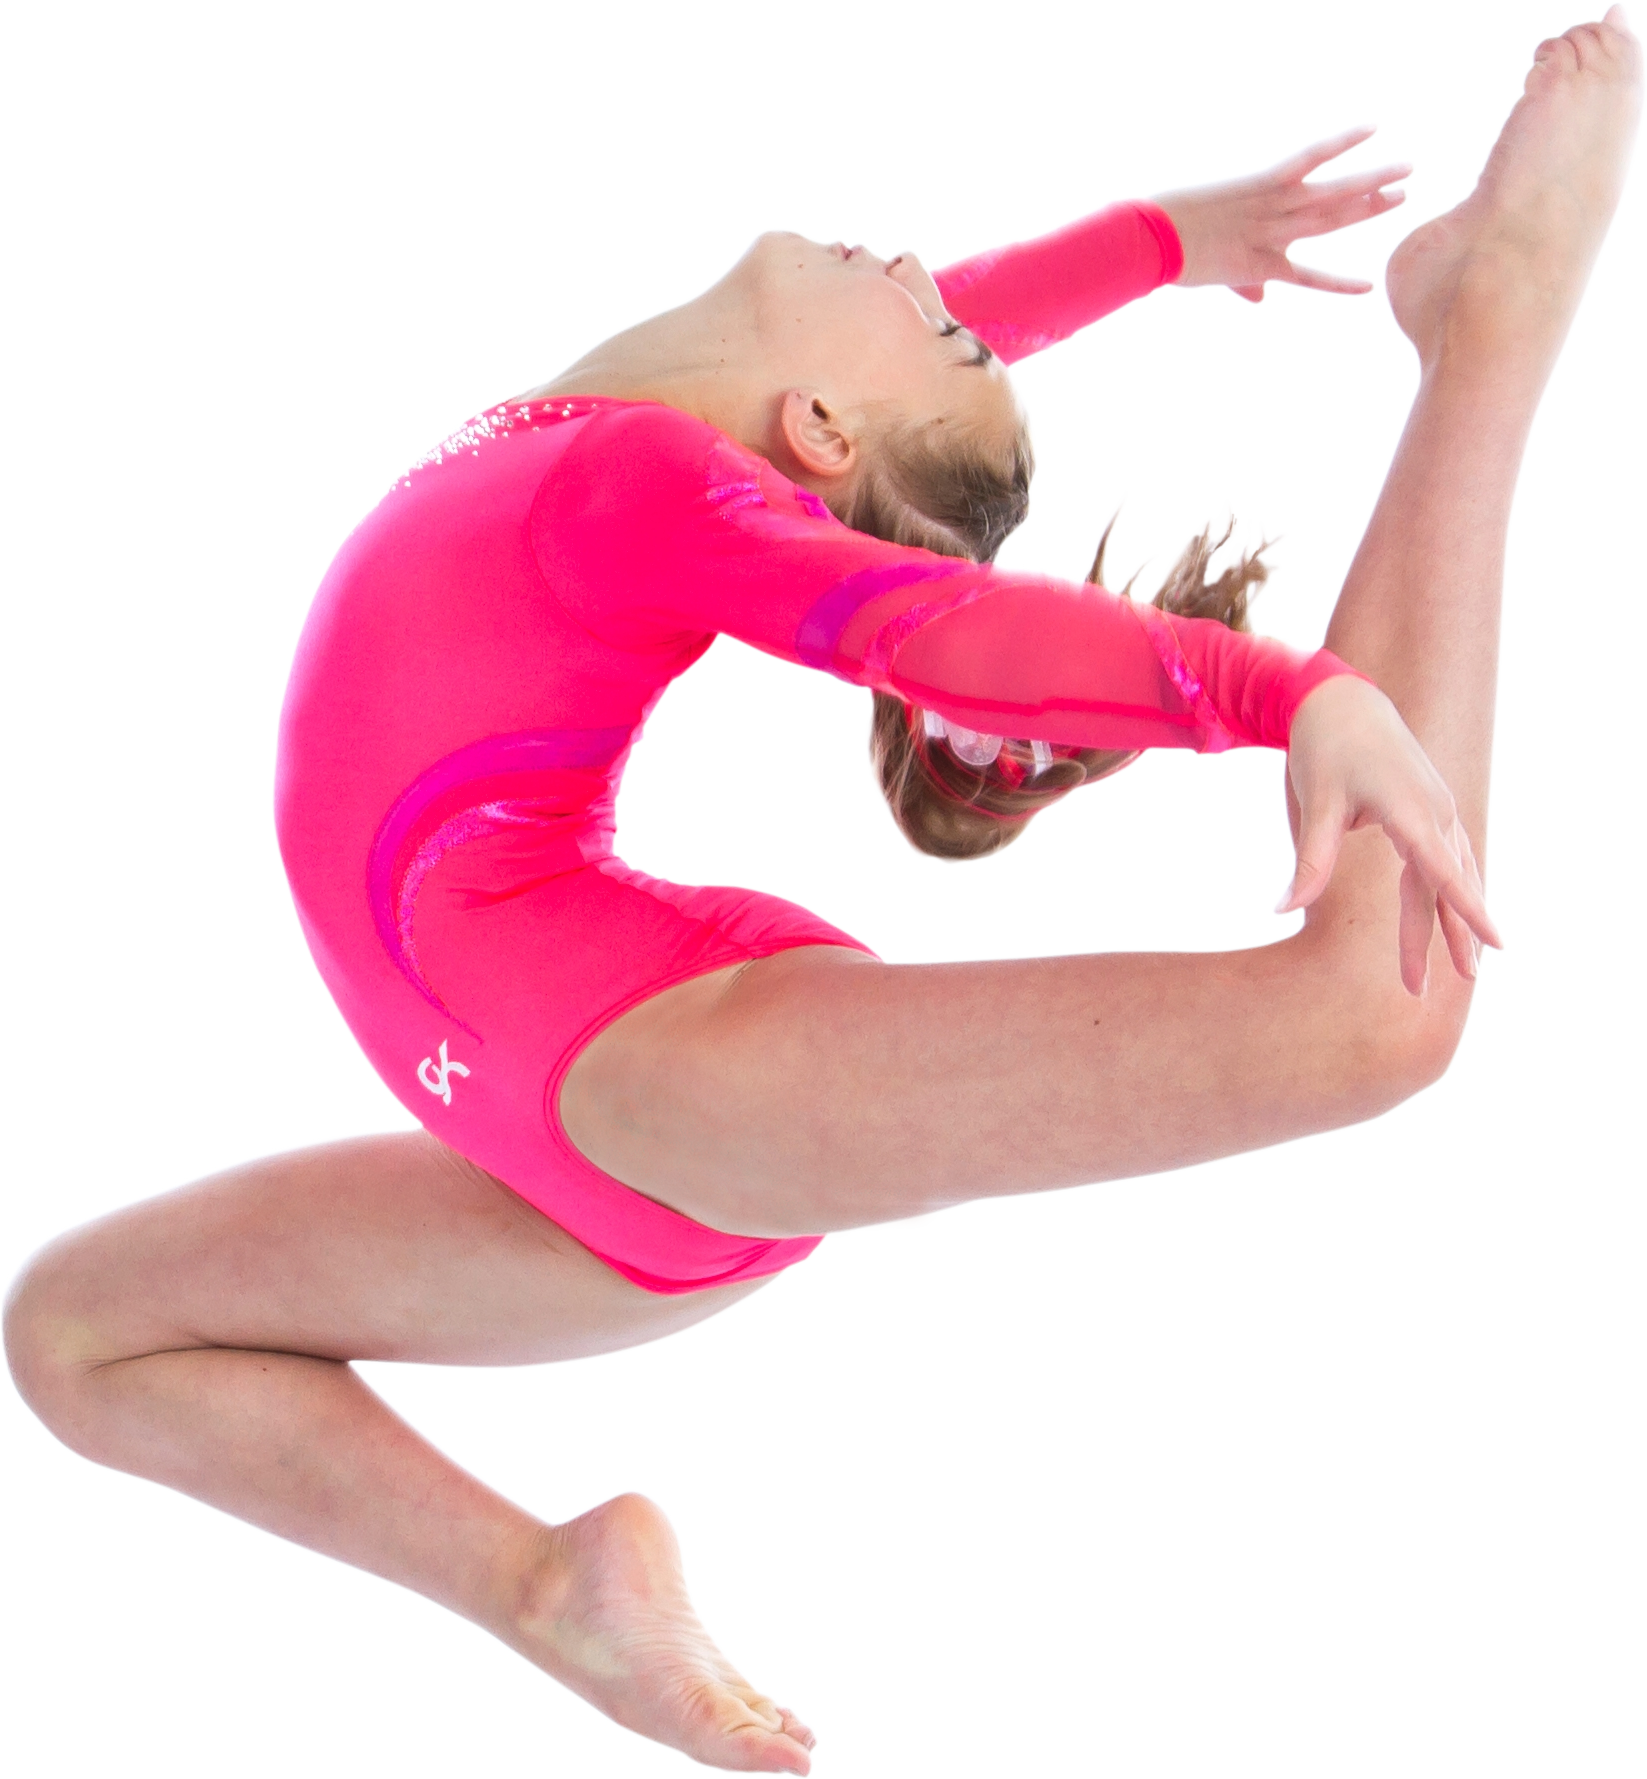 Gymnast Performing Back Bend